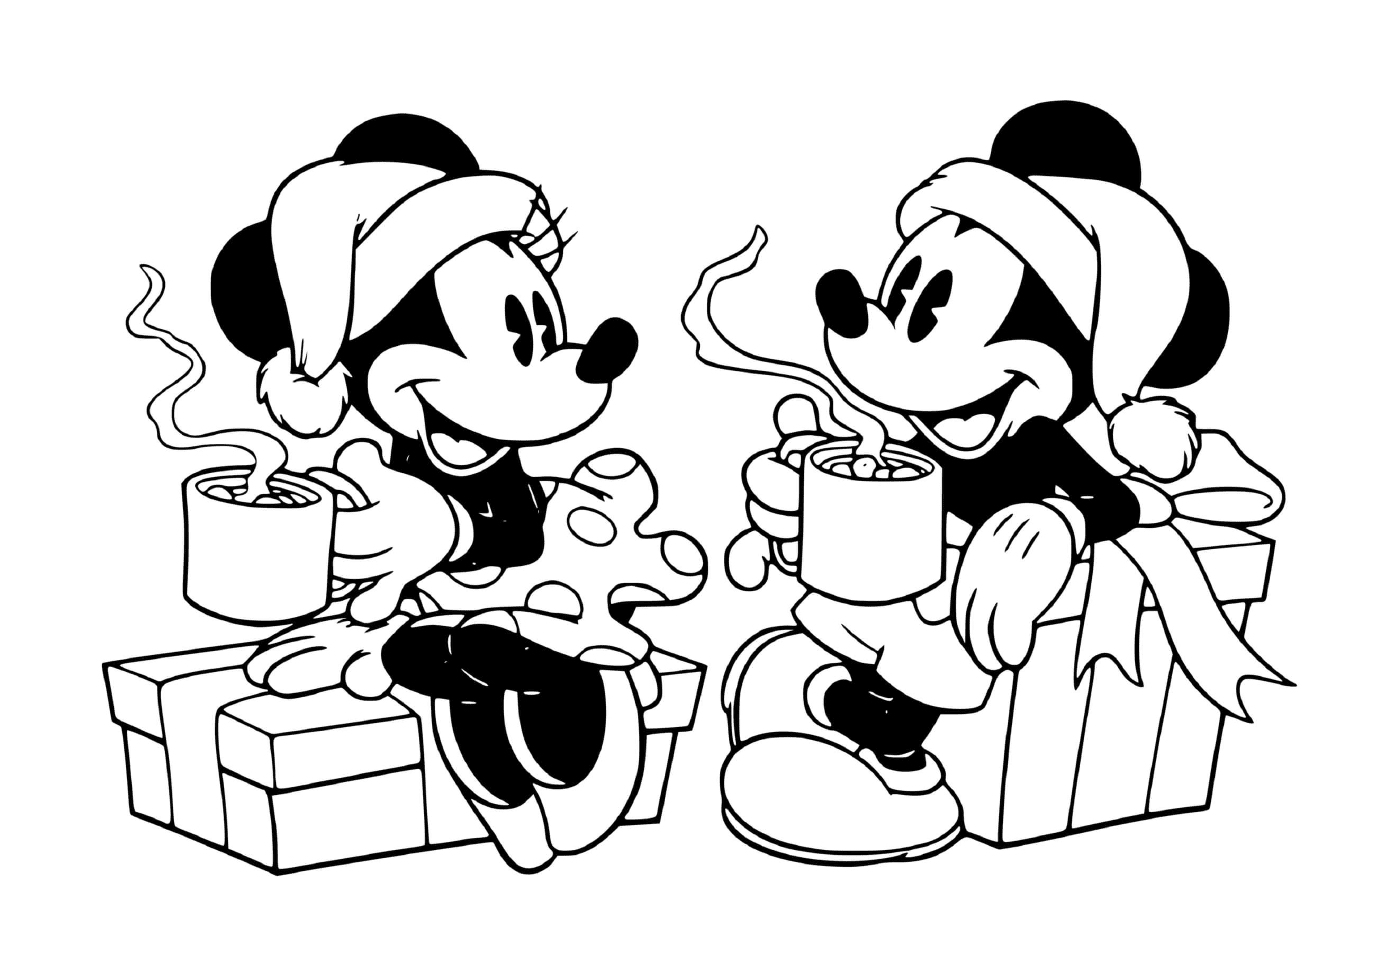  Mickey and Minnie taking hot chocolate 